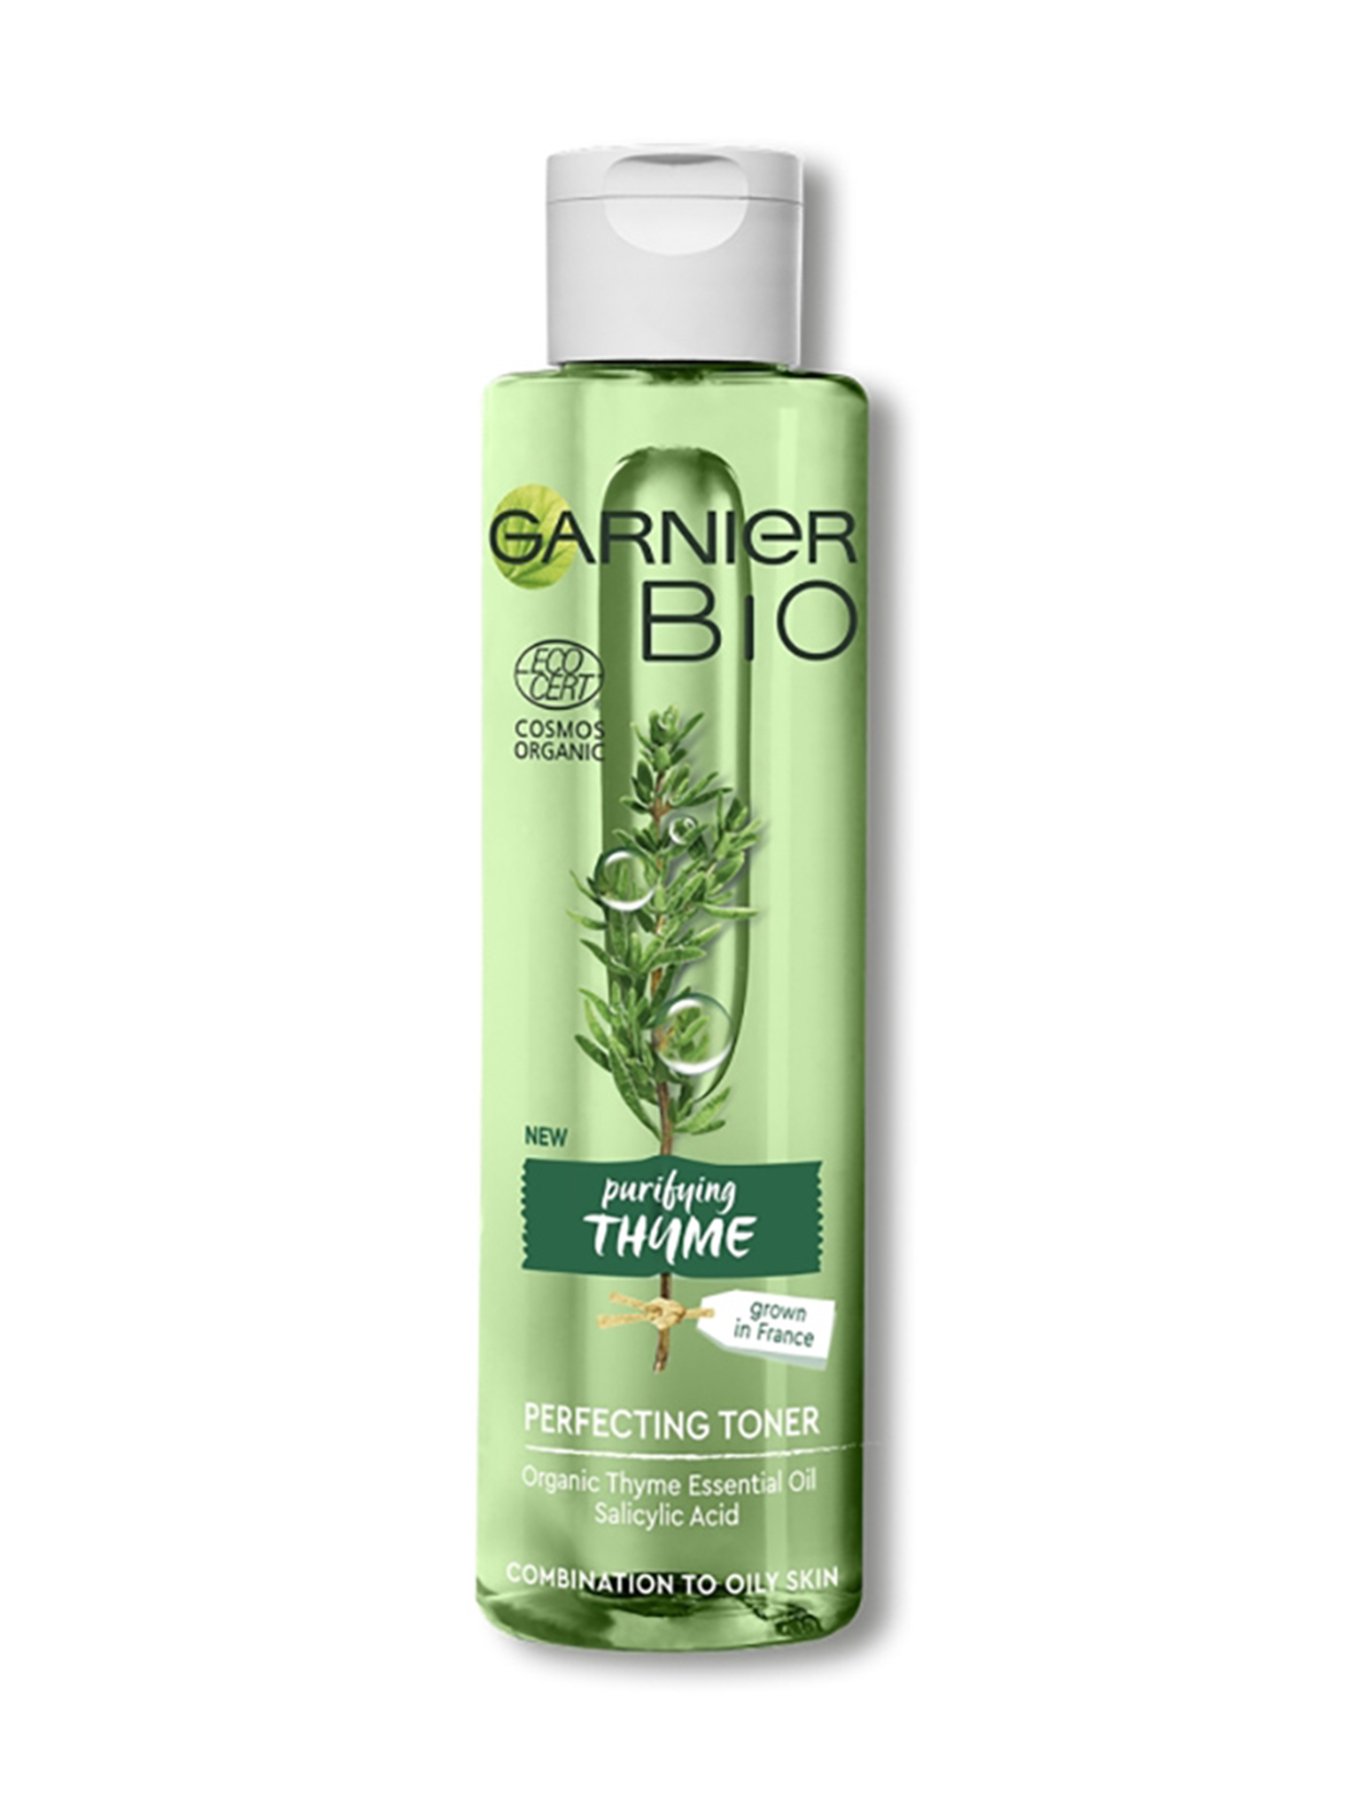 Garnier Bio Thyme tonik